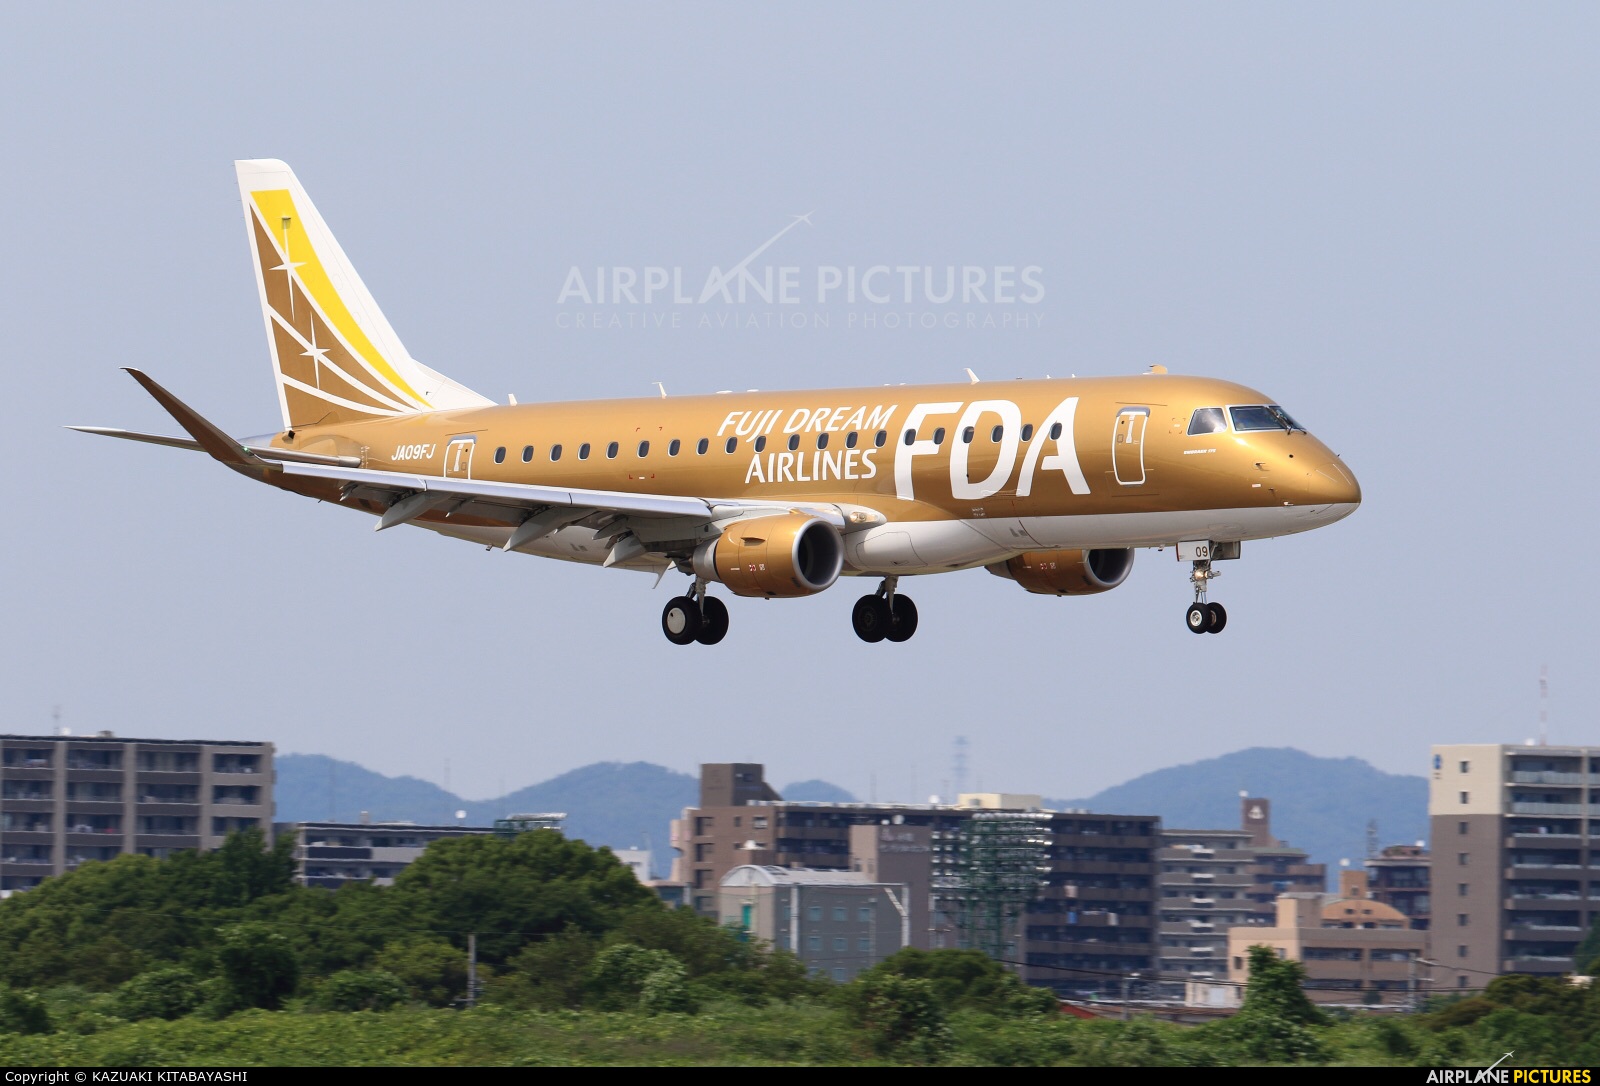 Fuji Dream Airlines JA09FJ aircraft at Nagoya - Komaki AB